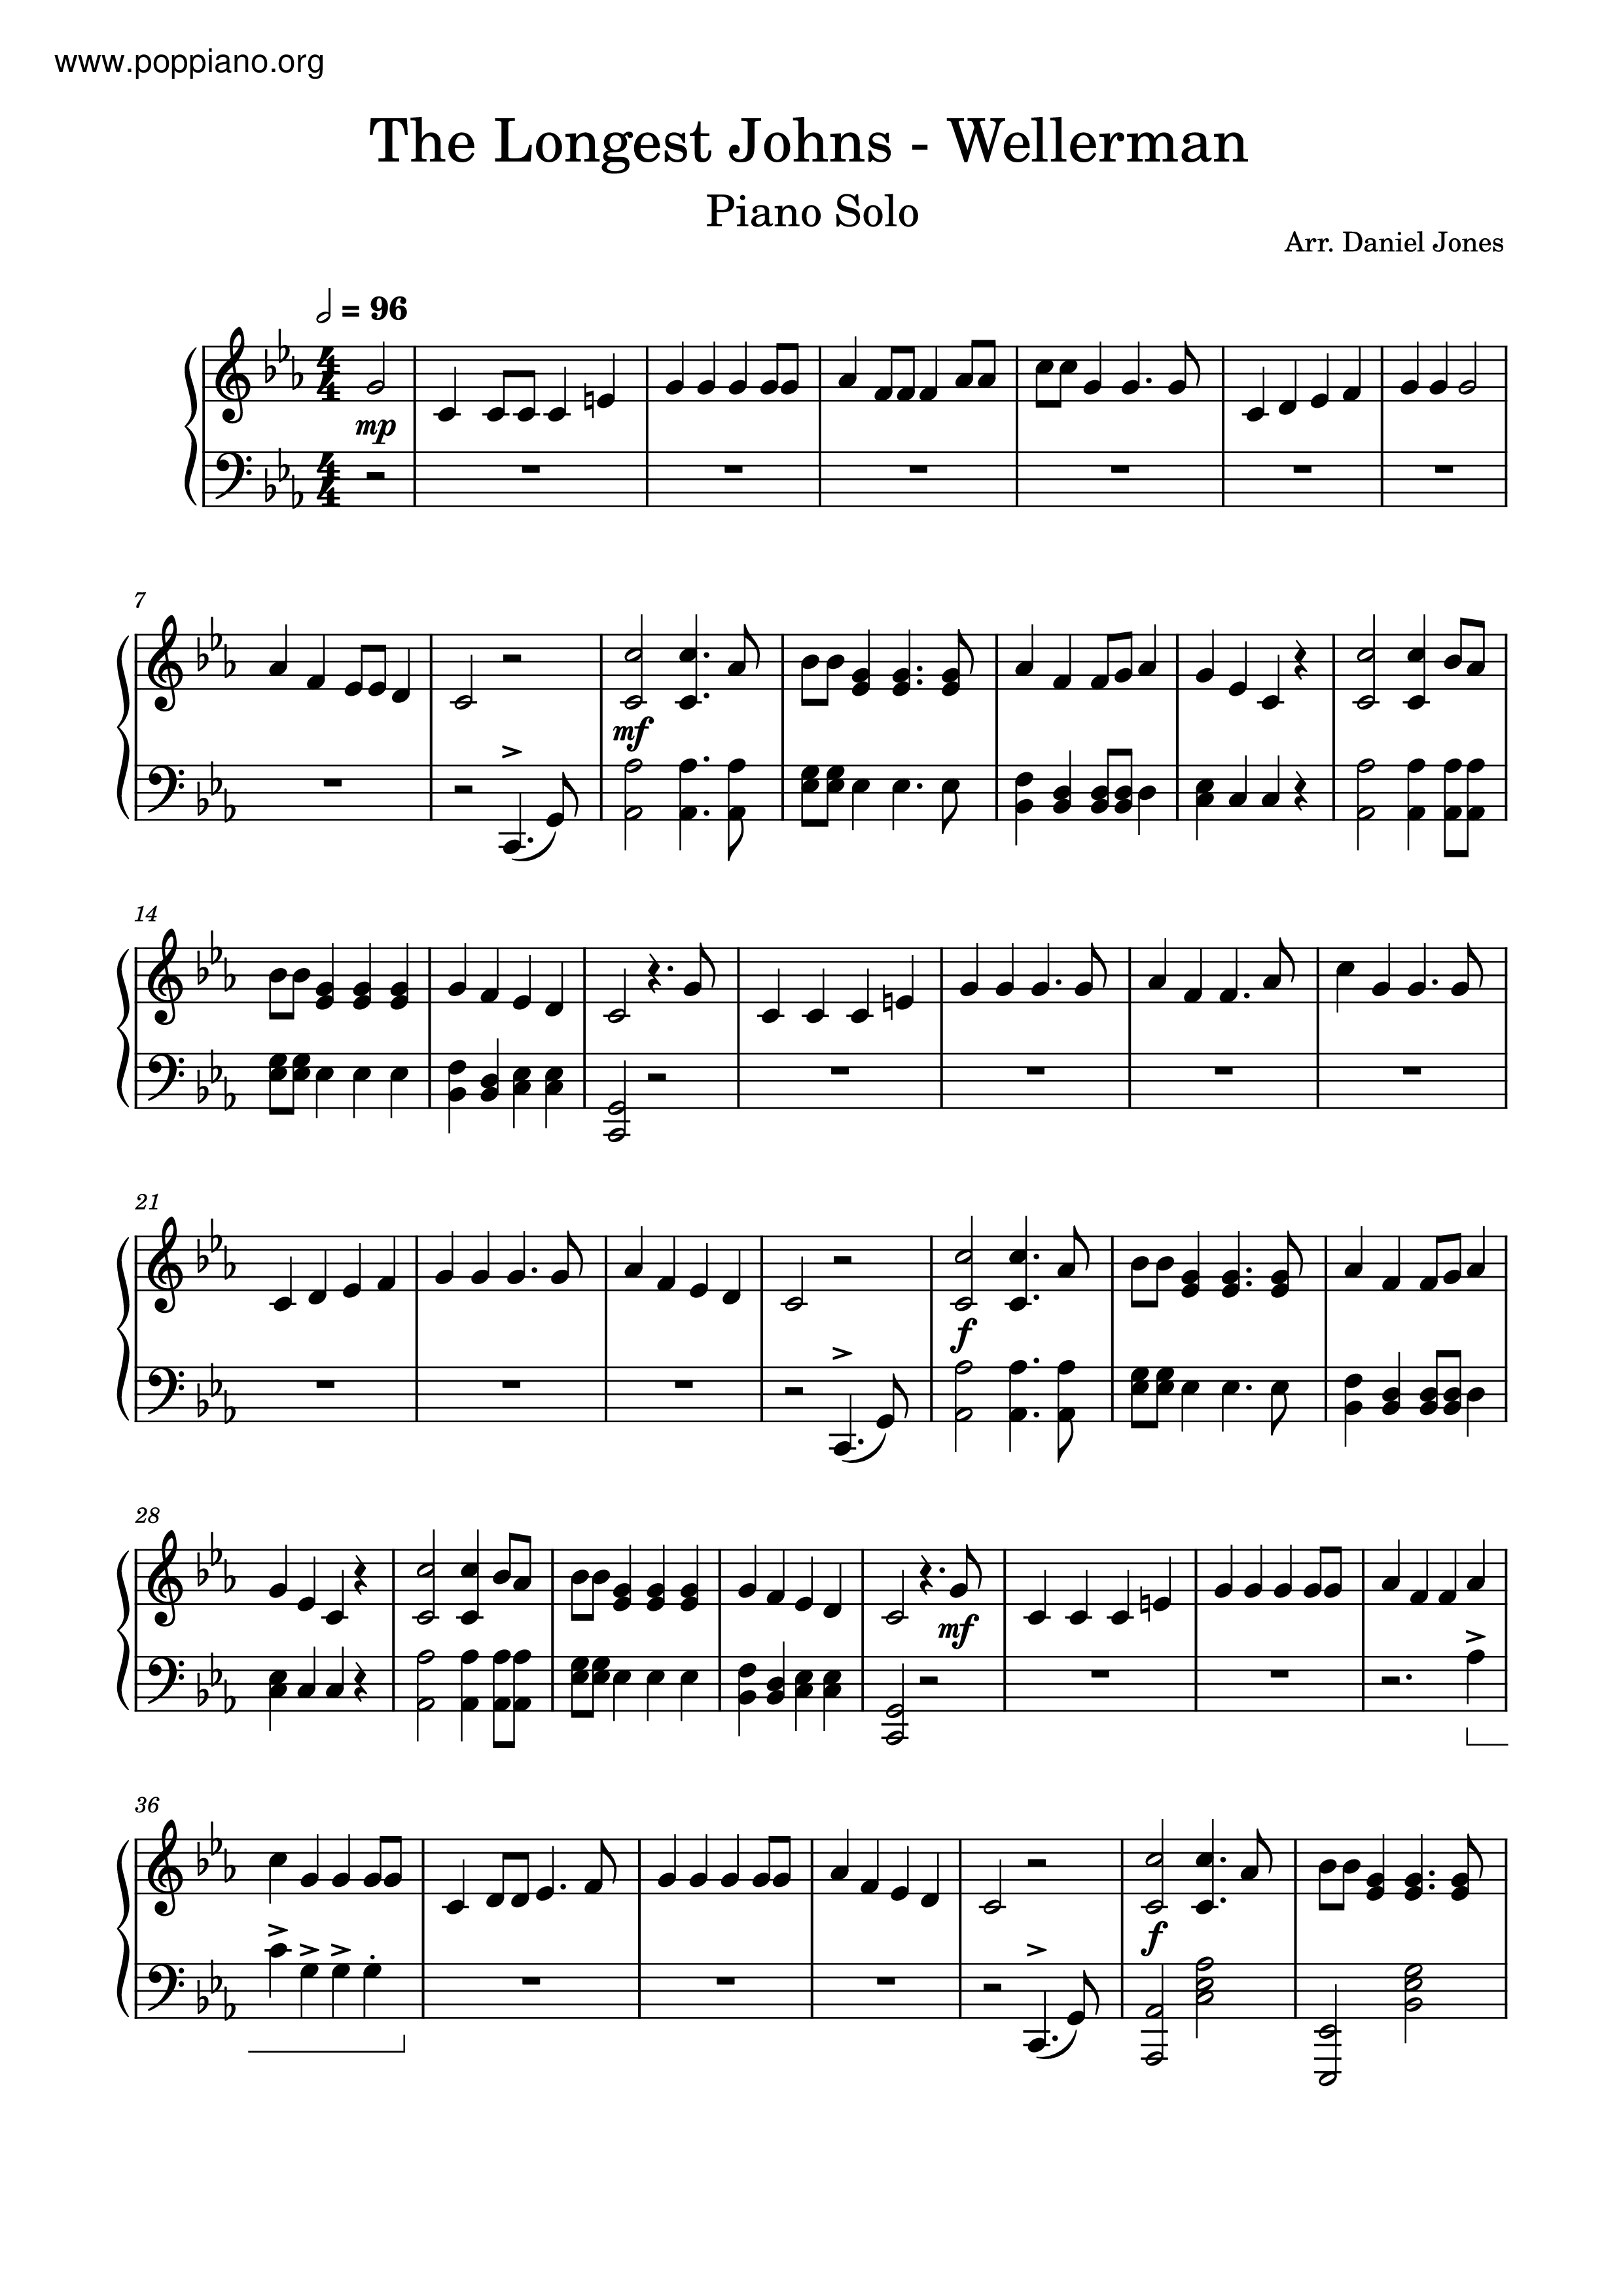 The Wellerman琴譜